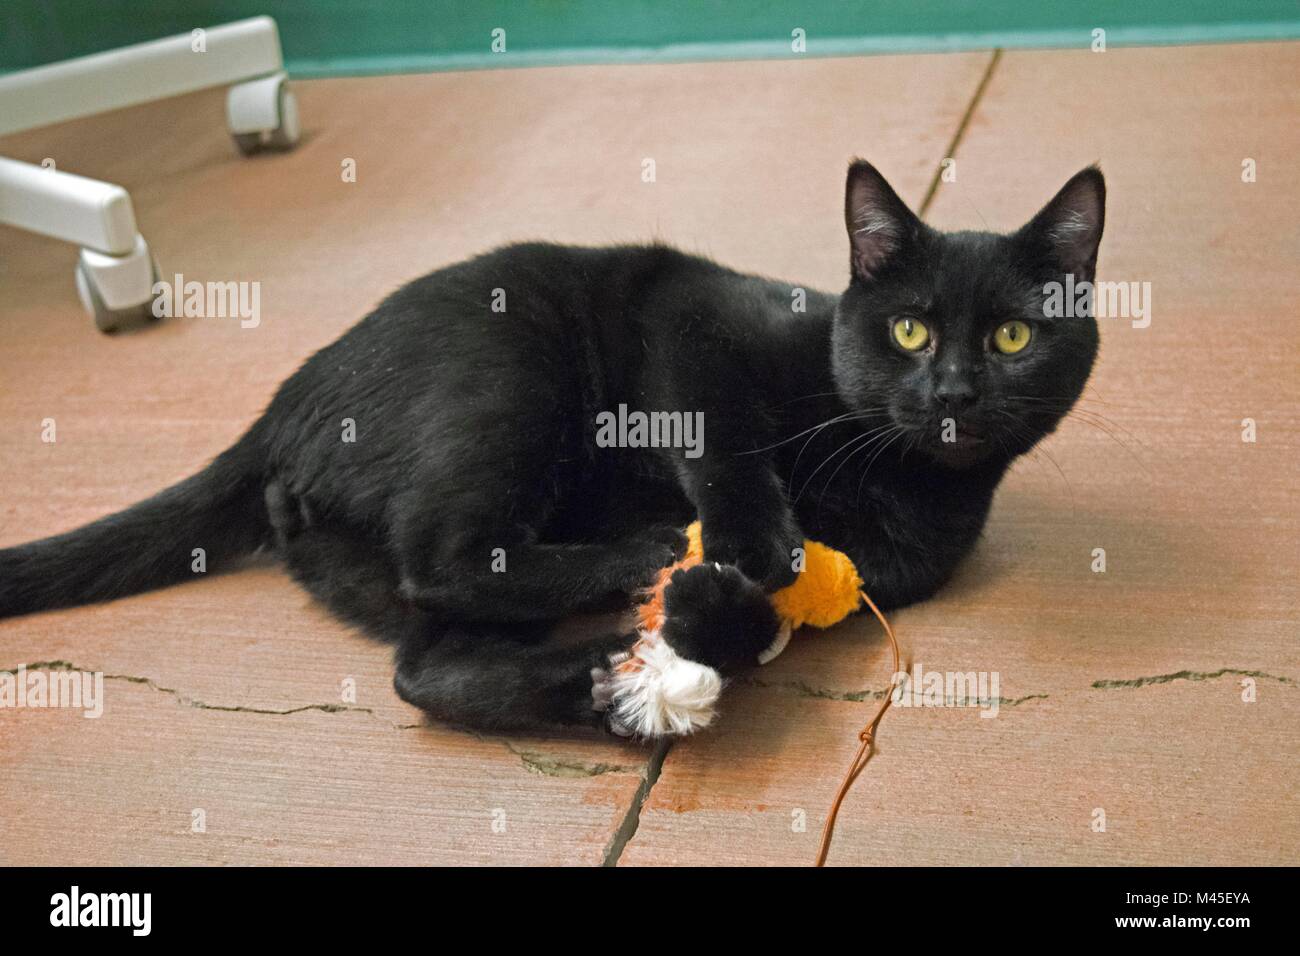 Gatos negros en adopcion fotografías e imágenes de alta resolución - Alamy